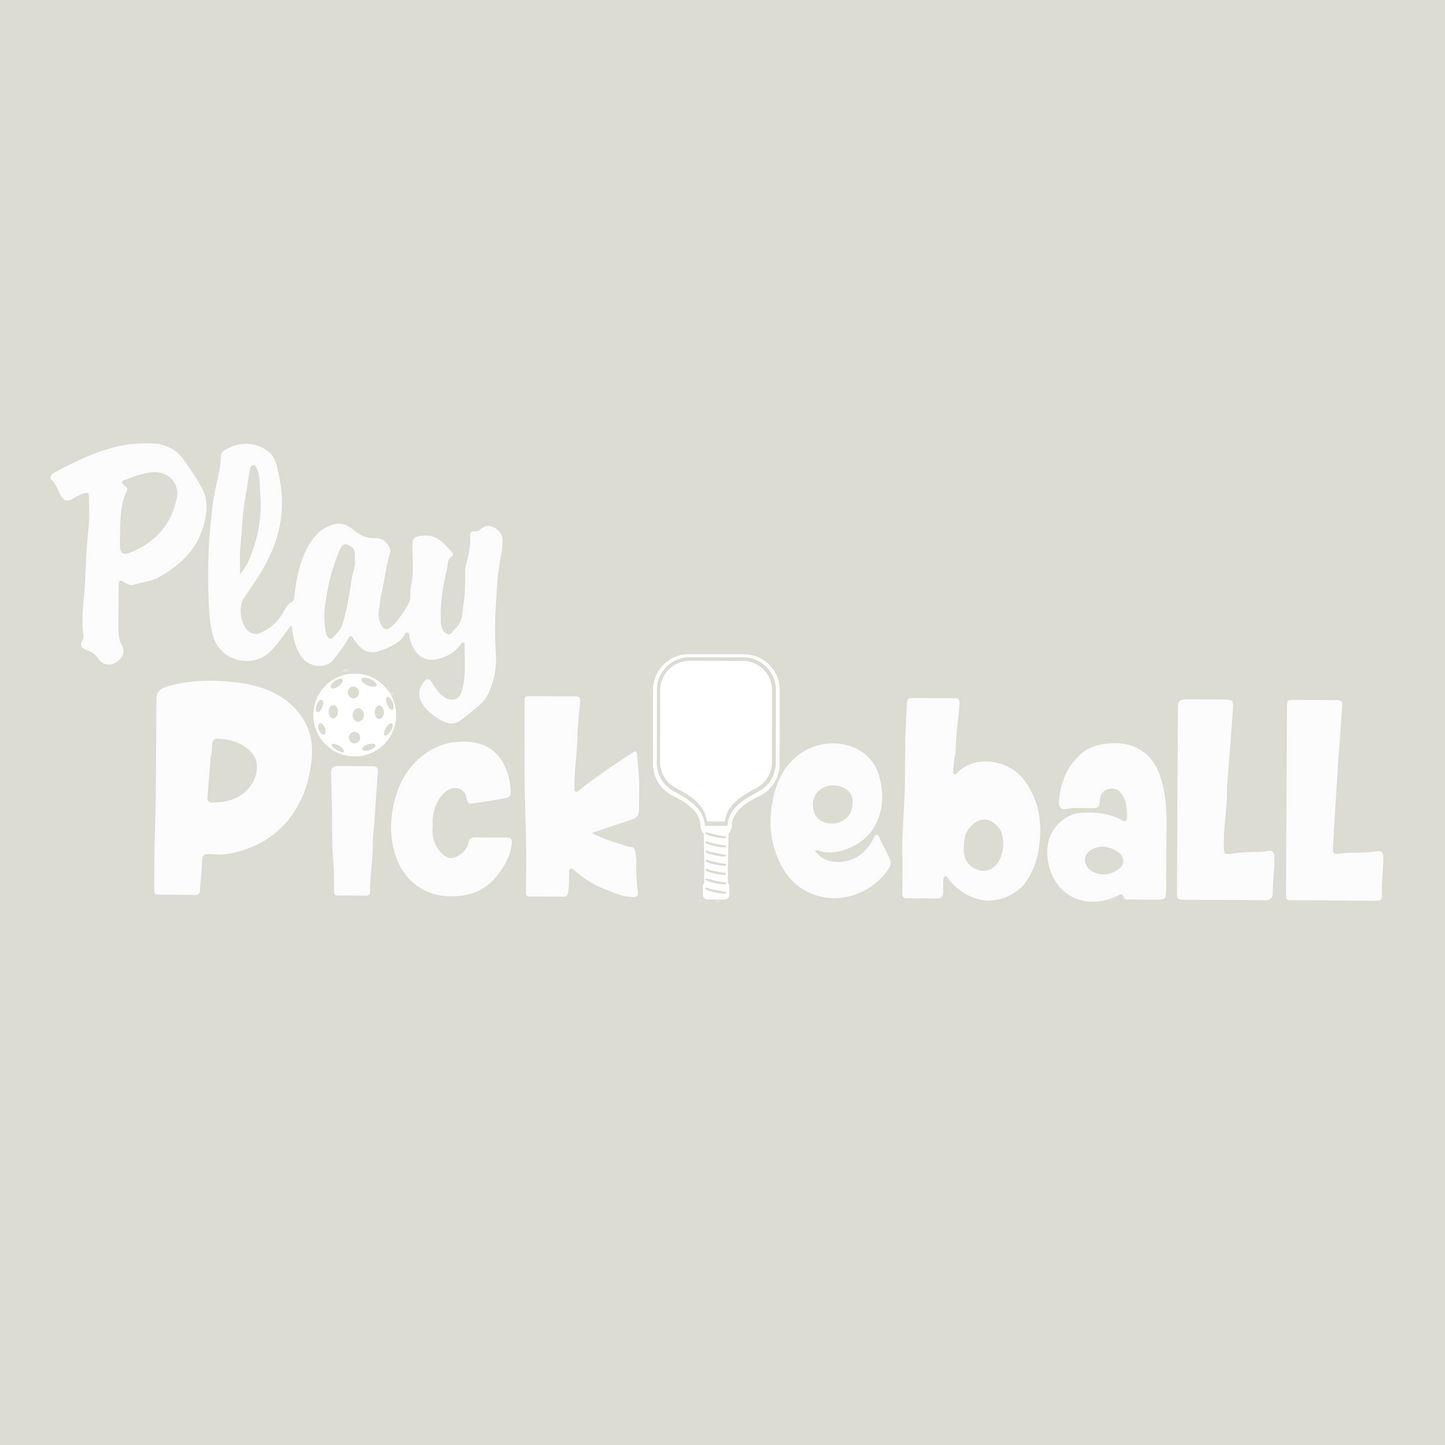 Play Pickleball | Women’s Short Sleeve Crewneck Athletic Shirts | 100% Polyester